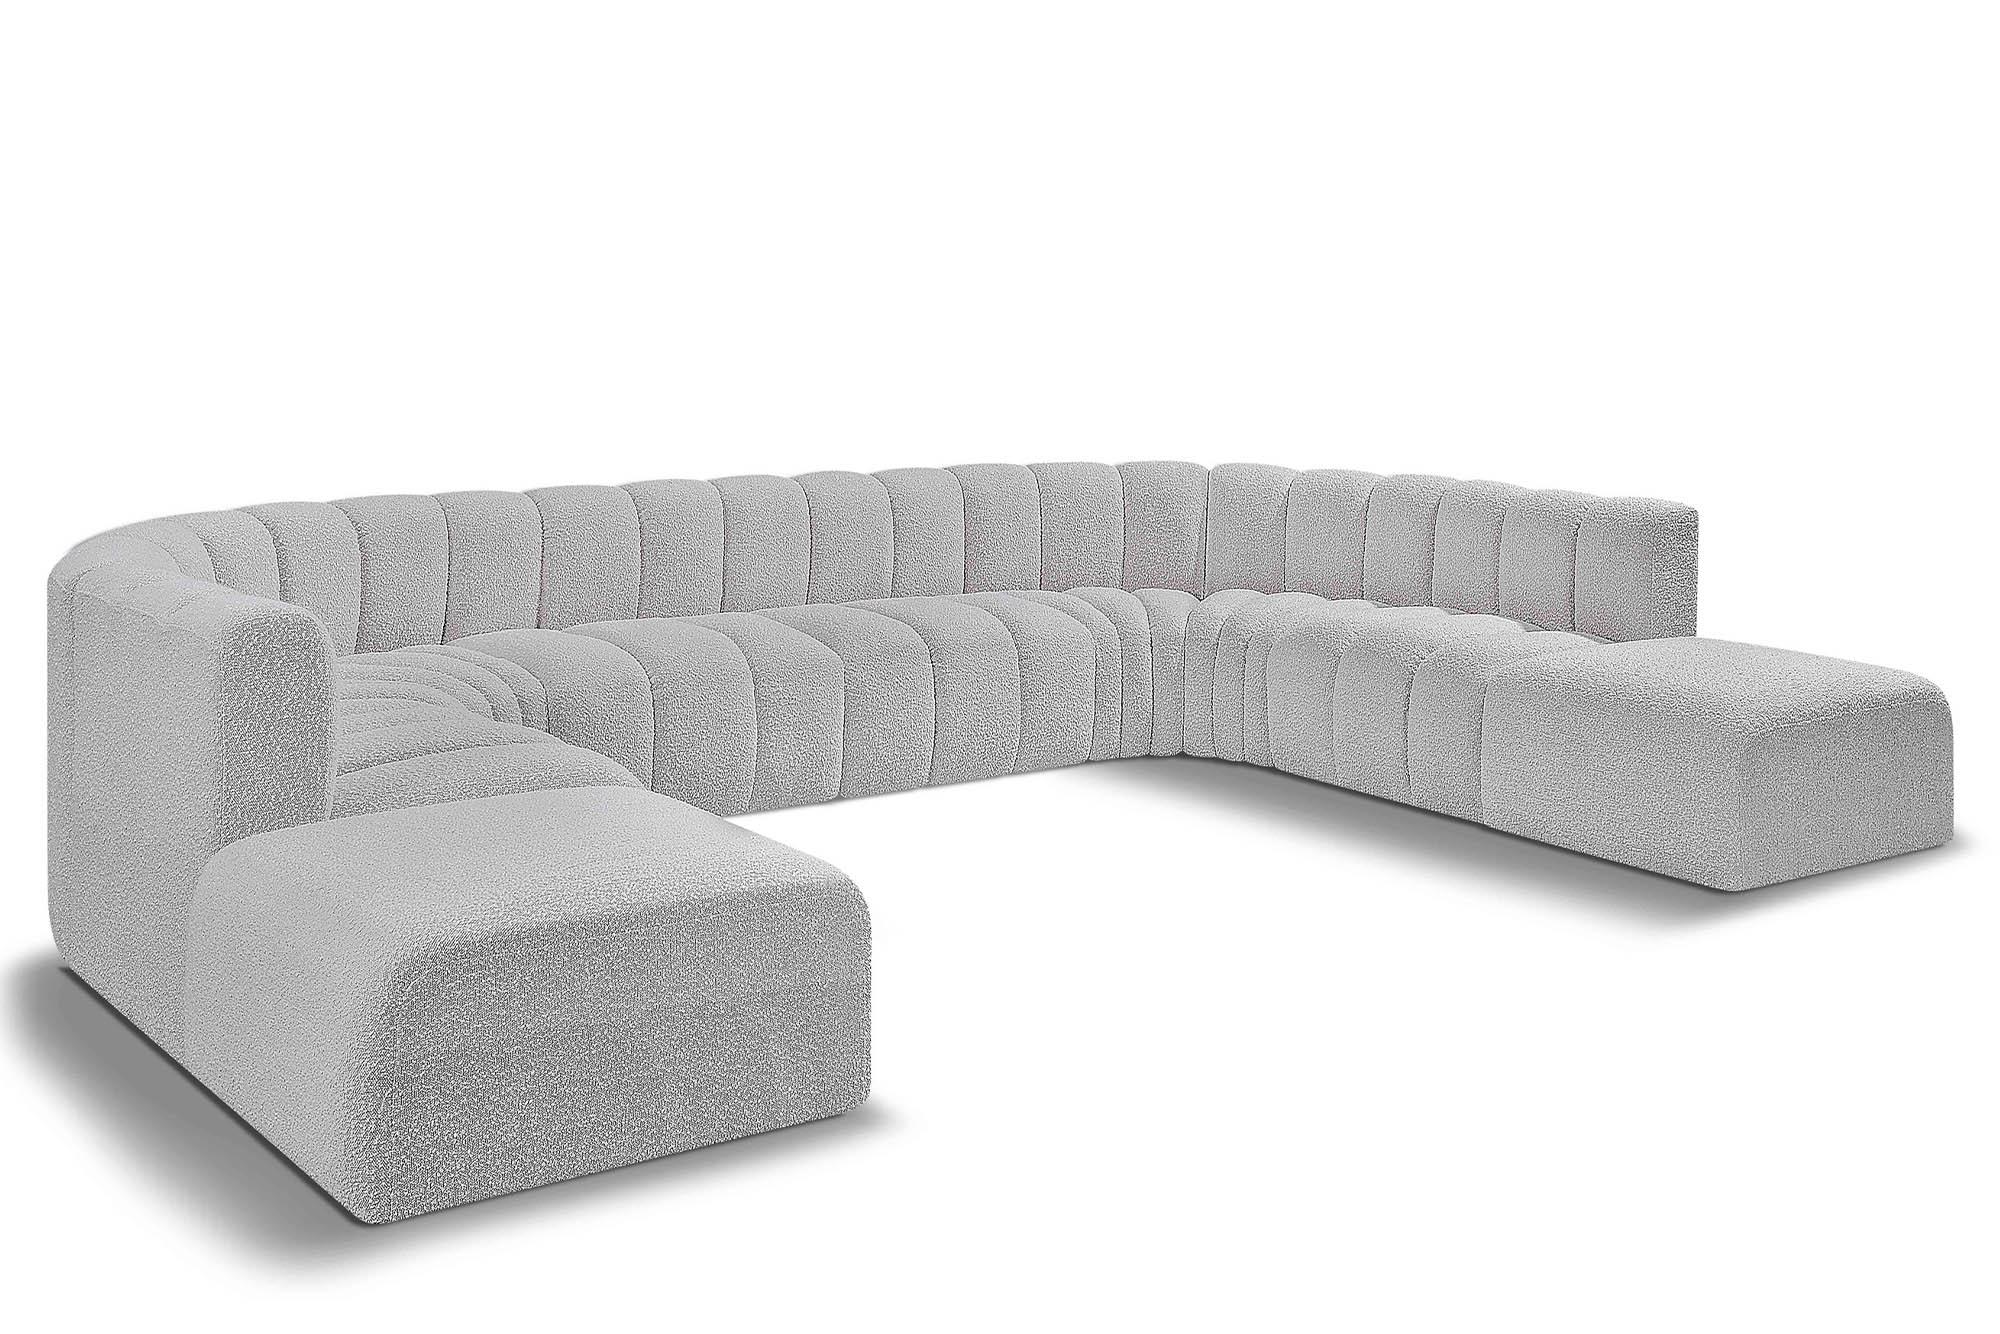 Contemporary, Modern Modular Sectional Sofa ARC 102Grey-S10A 102Grey-S10A in Gray 